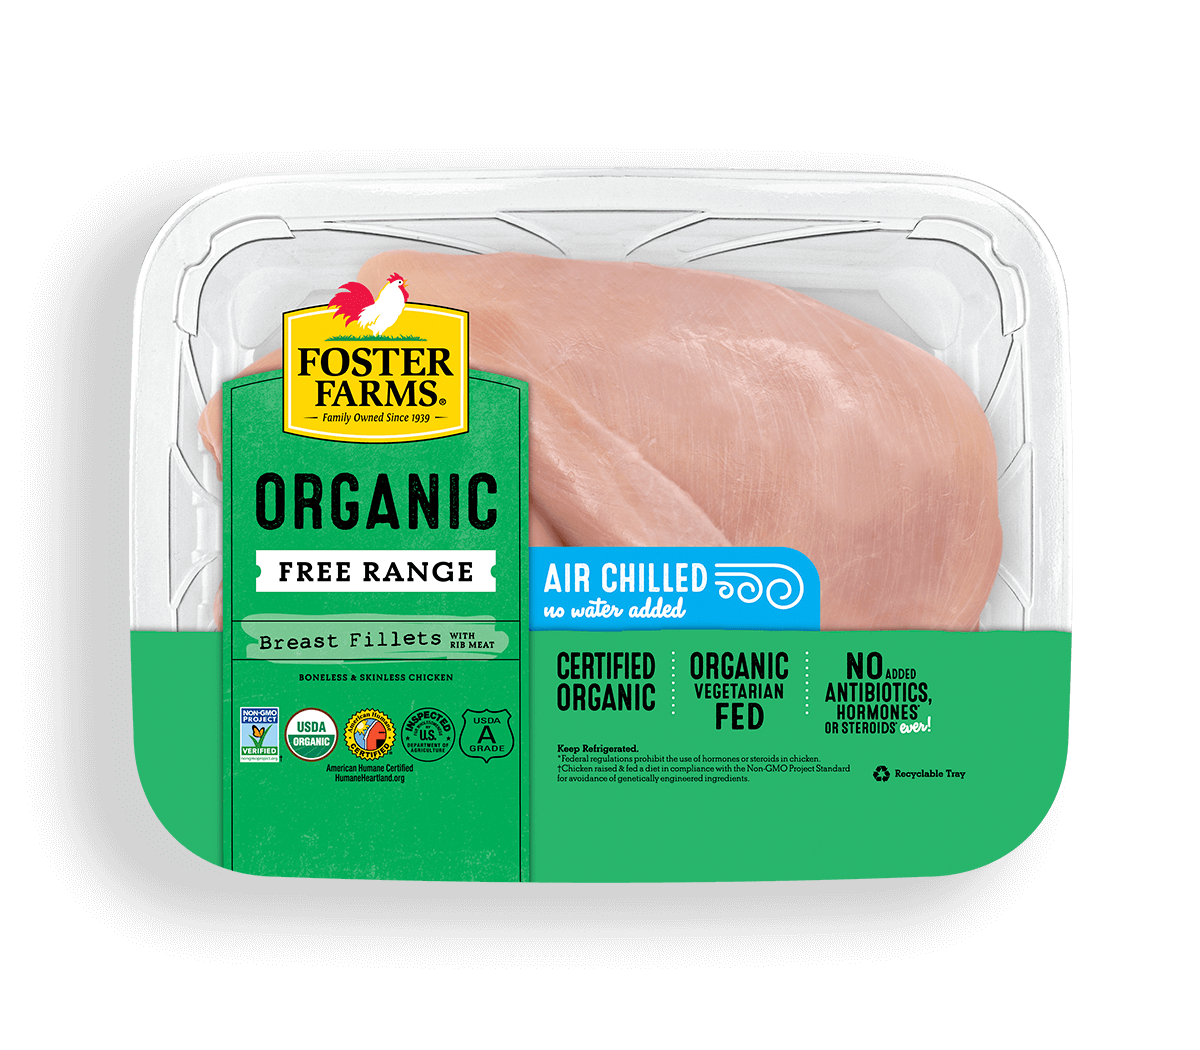 Organic Boneless Skinless Chicken Breast Fillets